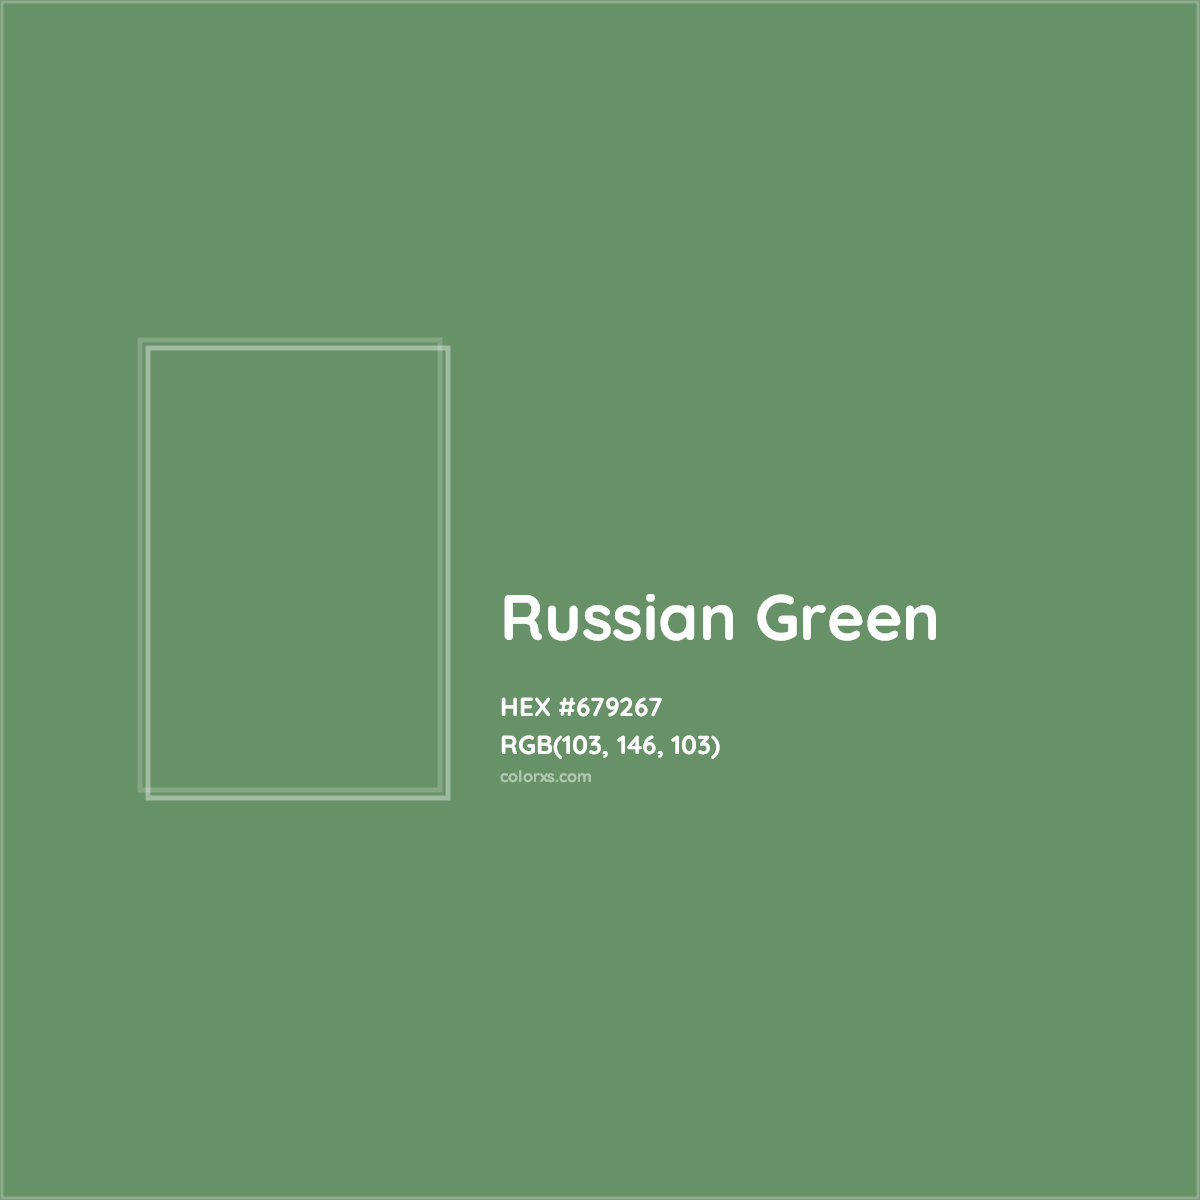 HEX #679267 Russian Green Color - Color Code